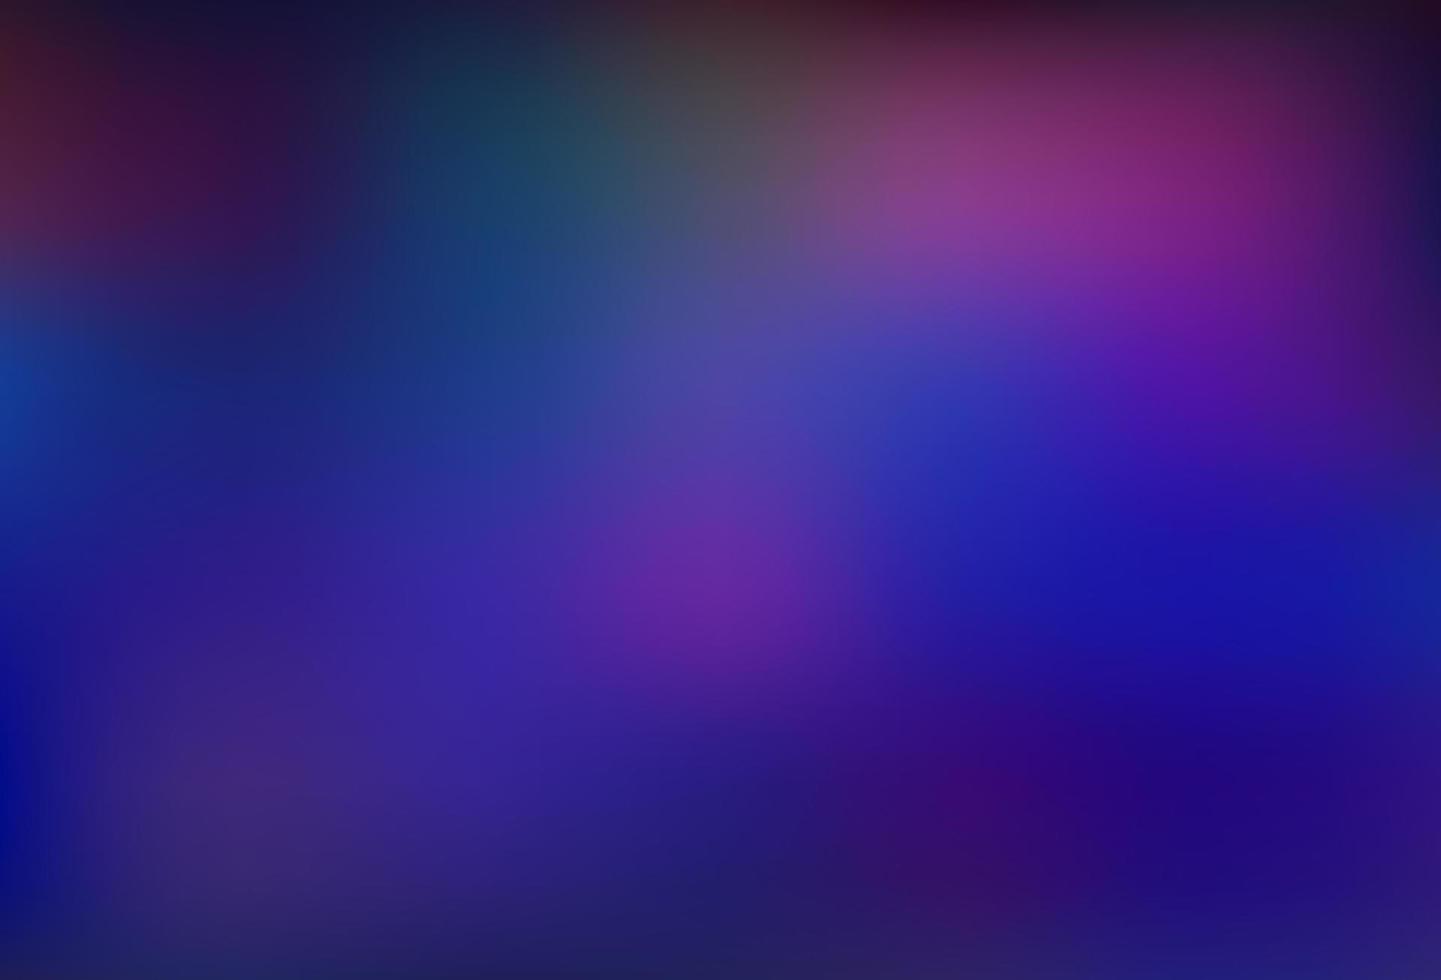 Dark Purple vector blurred shine abstract background.